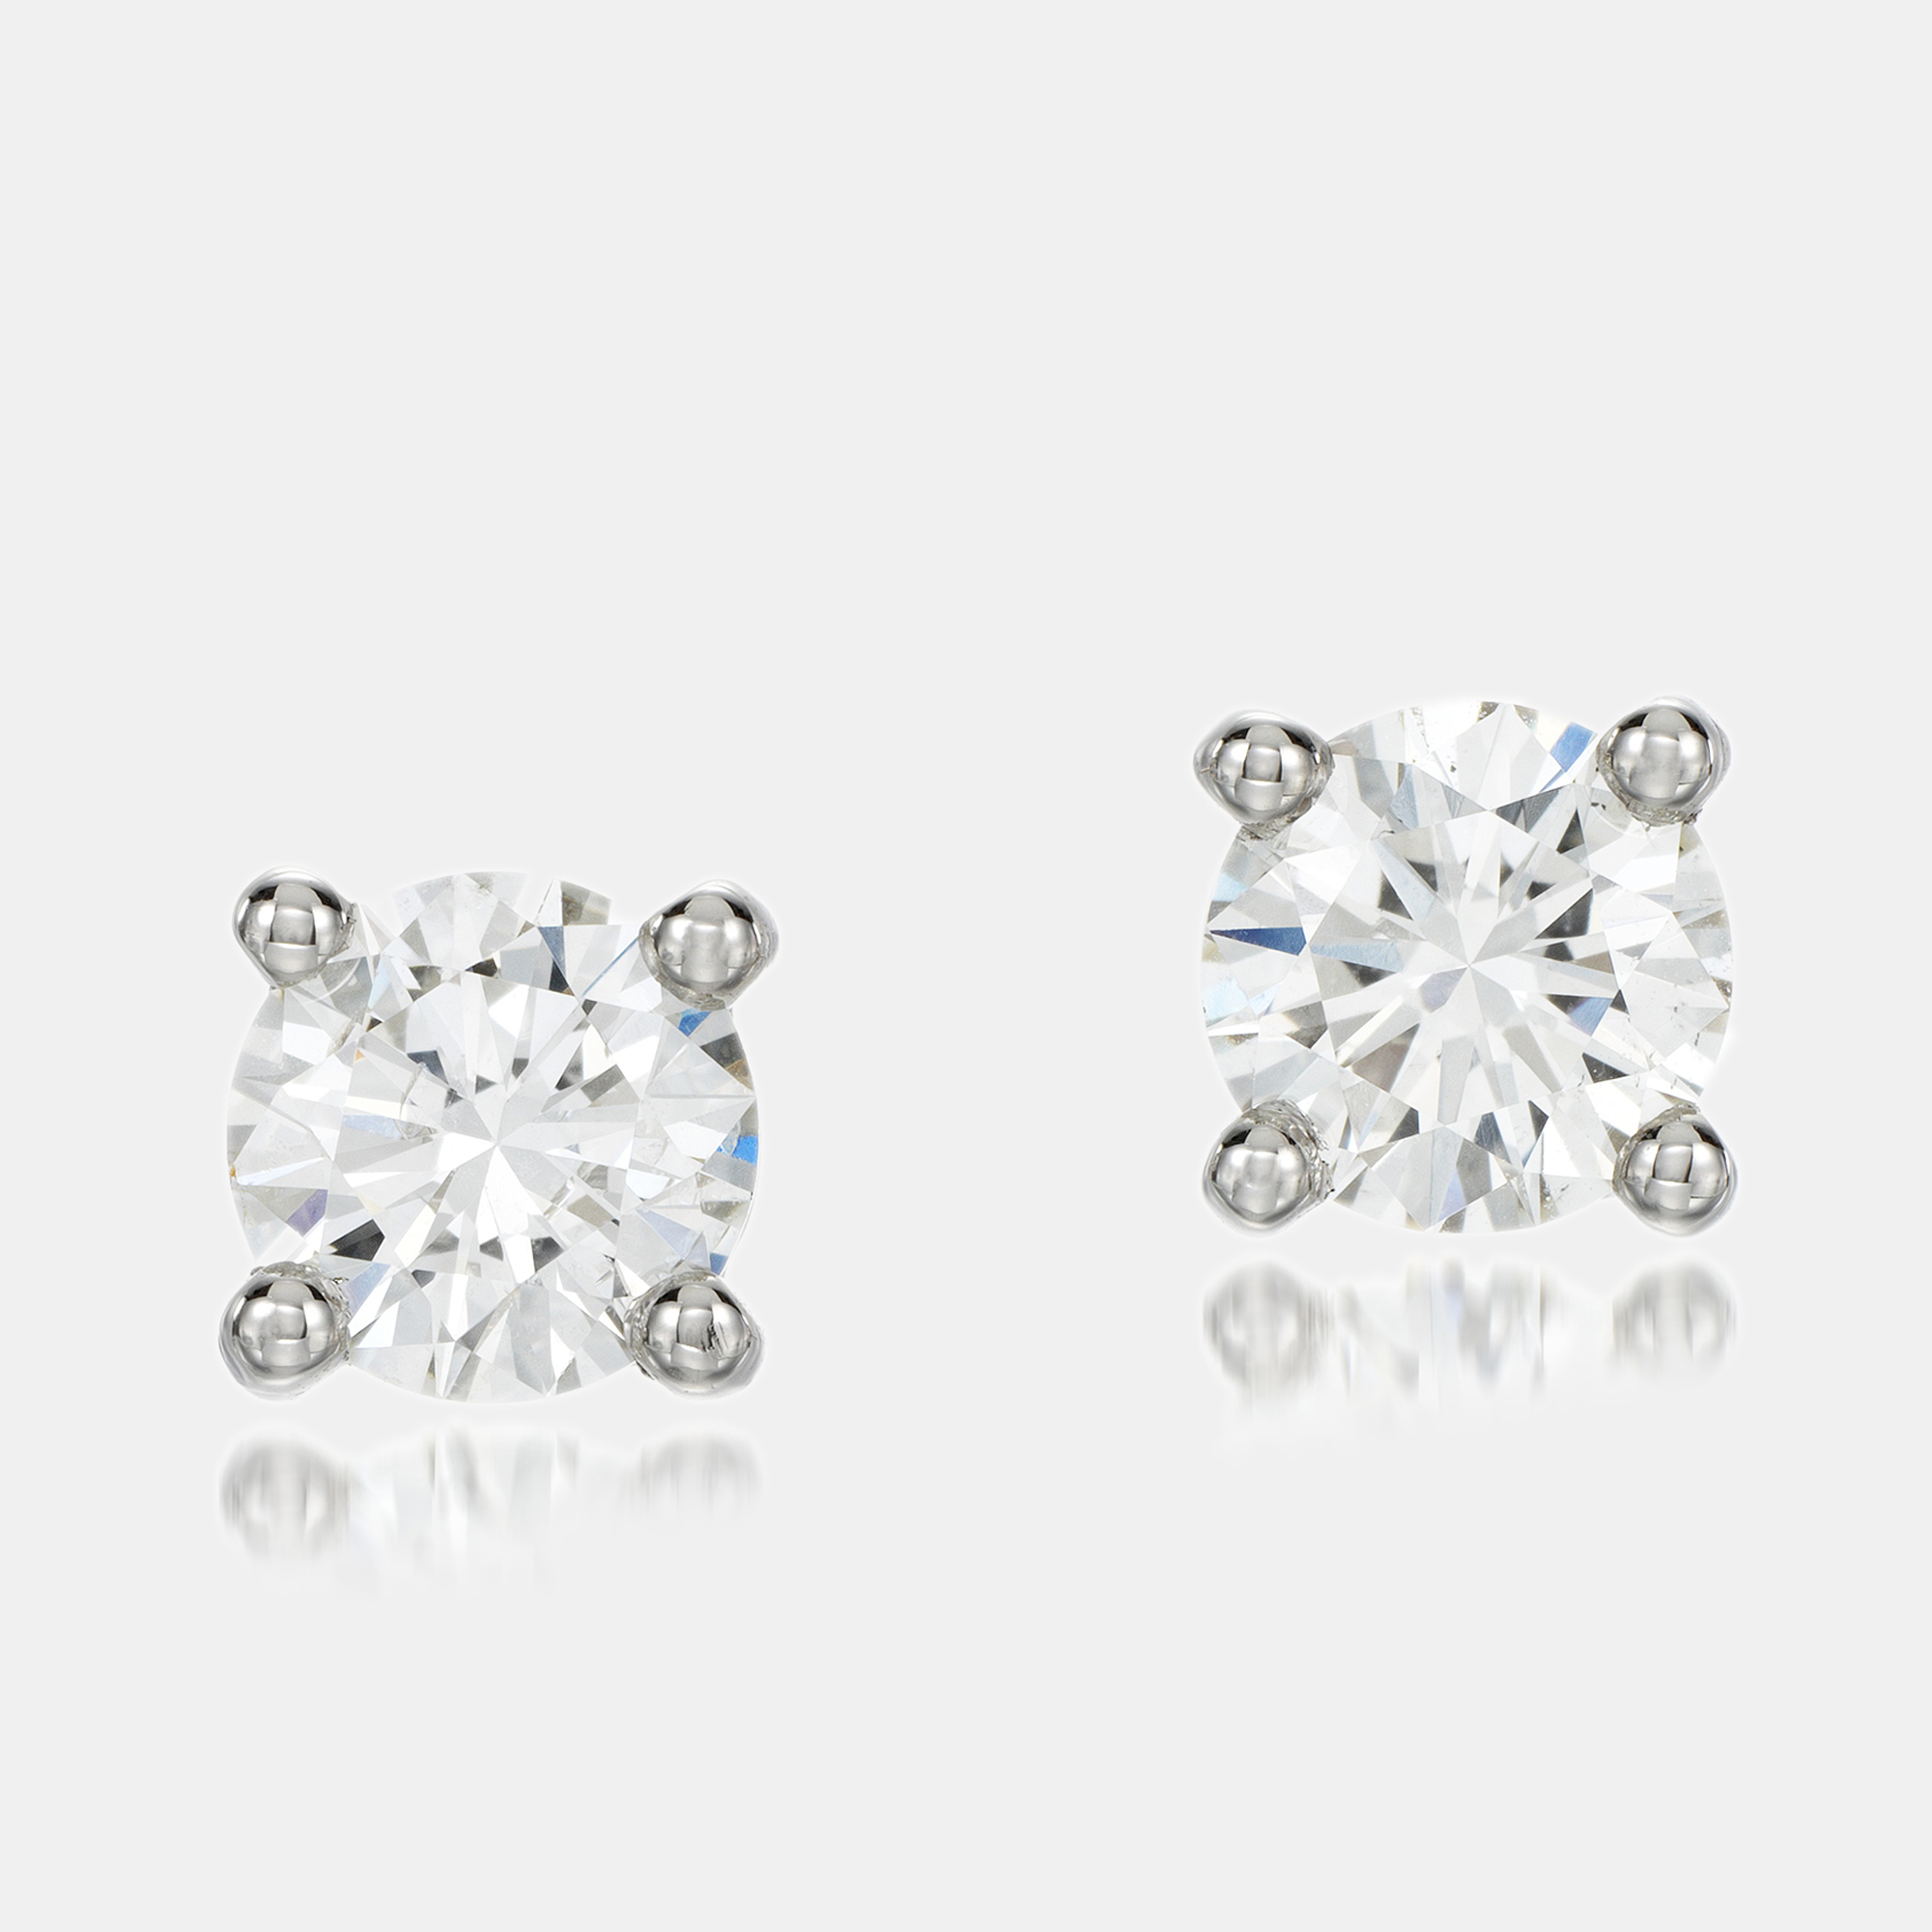 The diamond edit 18k white gold diamonds 1.20 ct. stud earrings